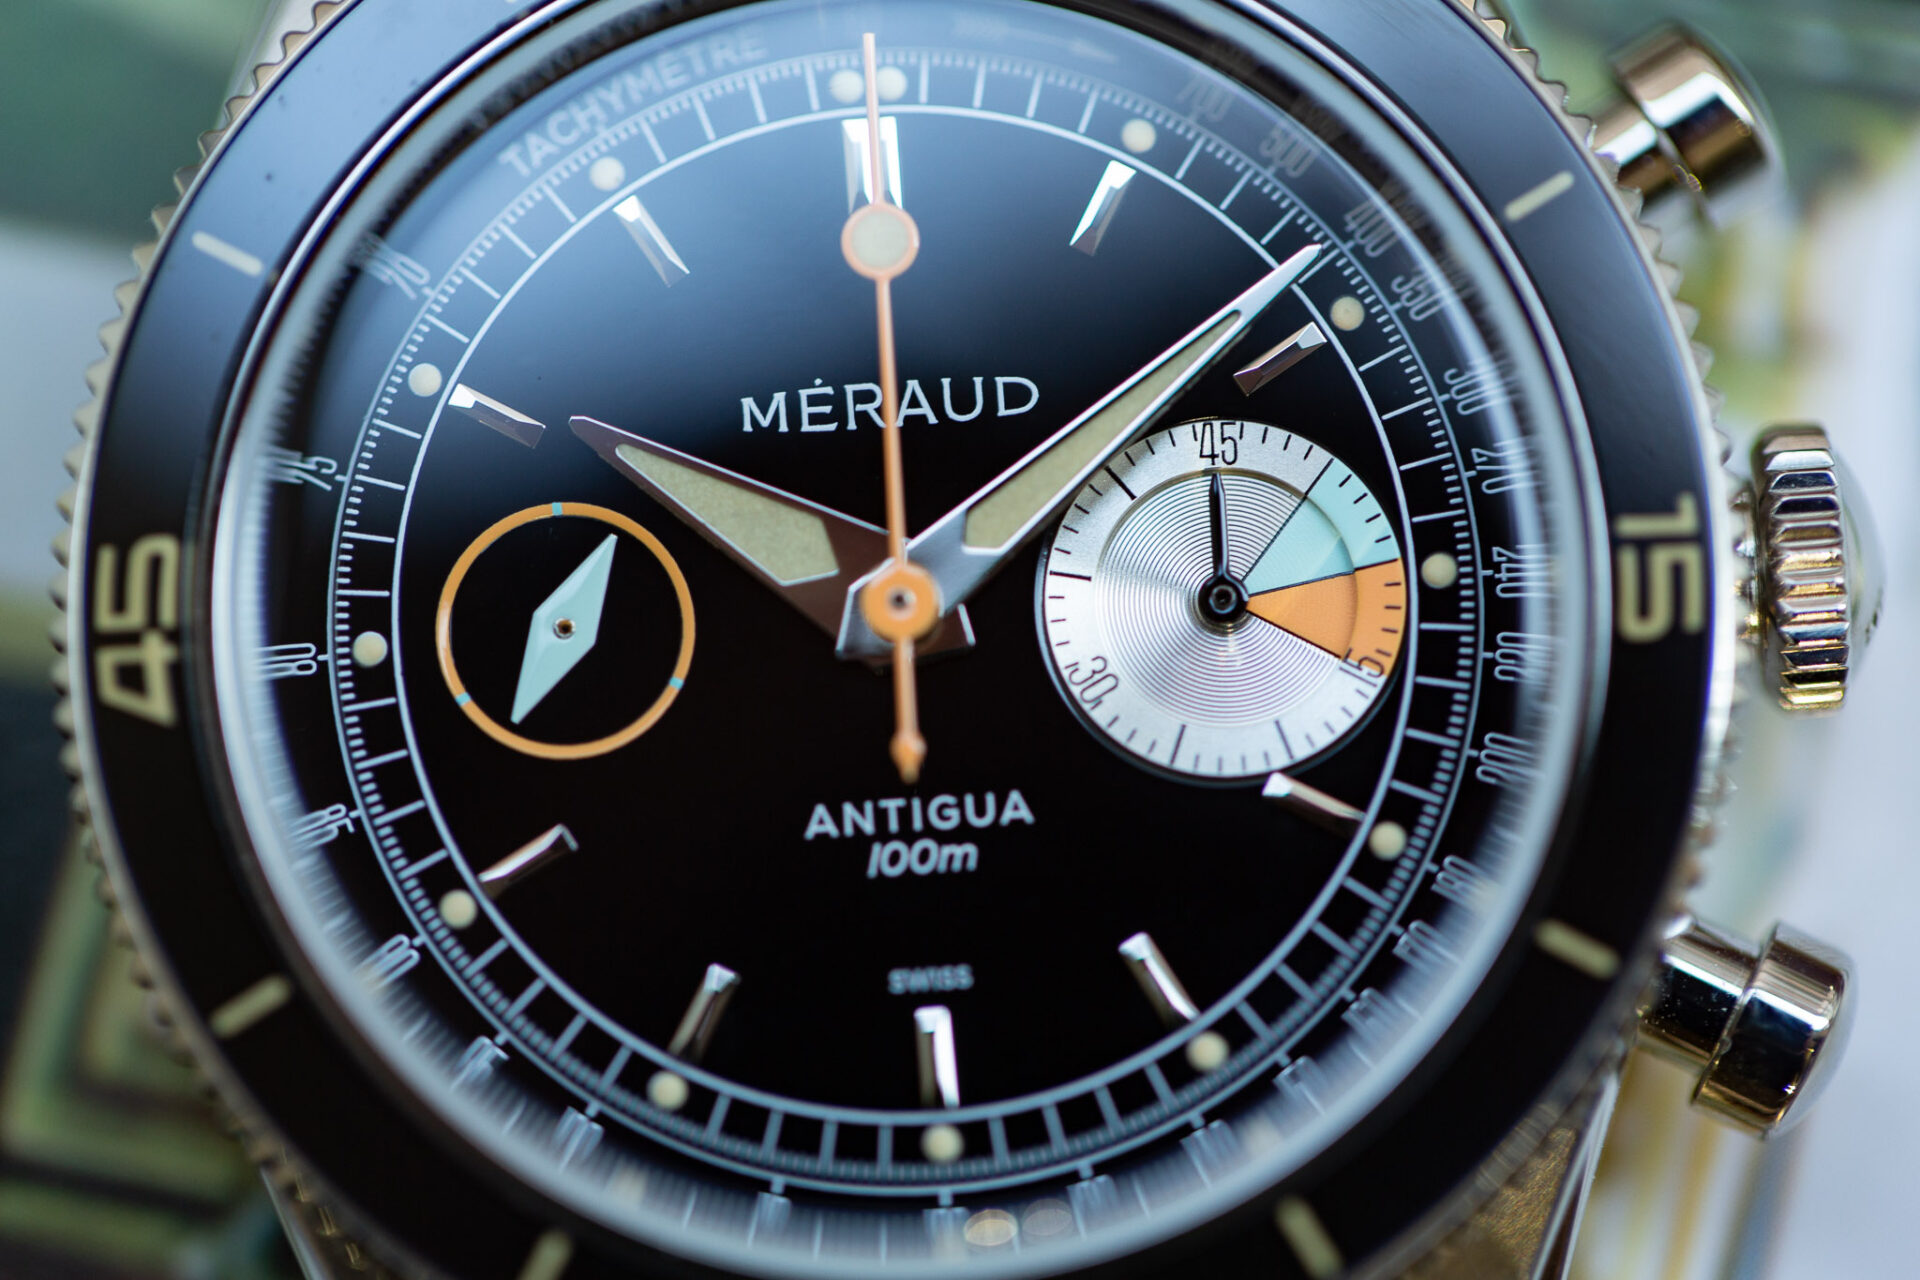 Meraud Antigua chronograph